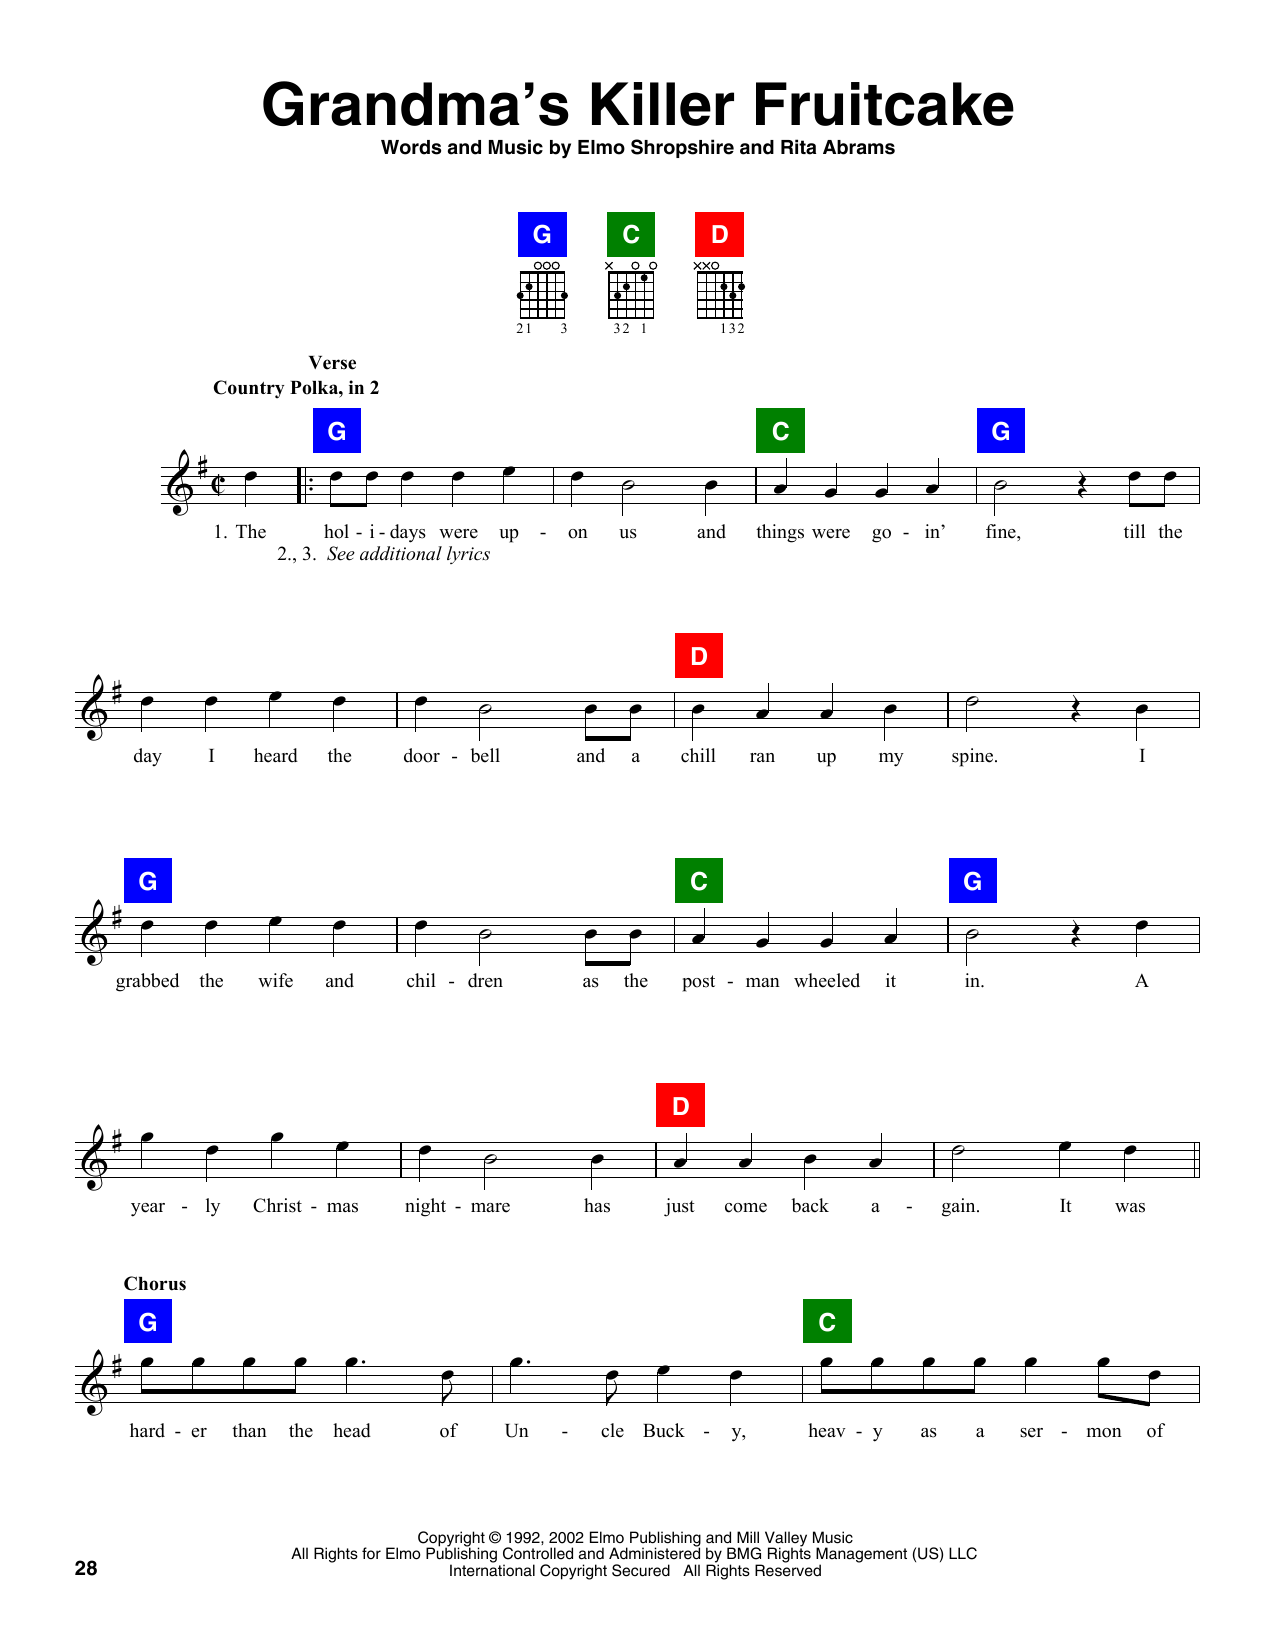 Elmo Shropshire Grandma's Killer Fruitcake Sheet Music Notes & Chords for French Horn - Download or Print PDF